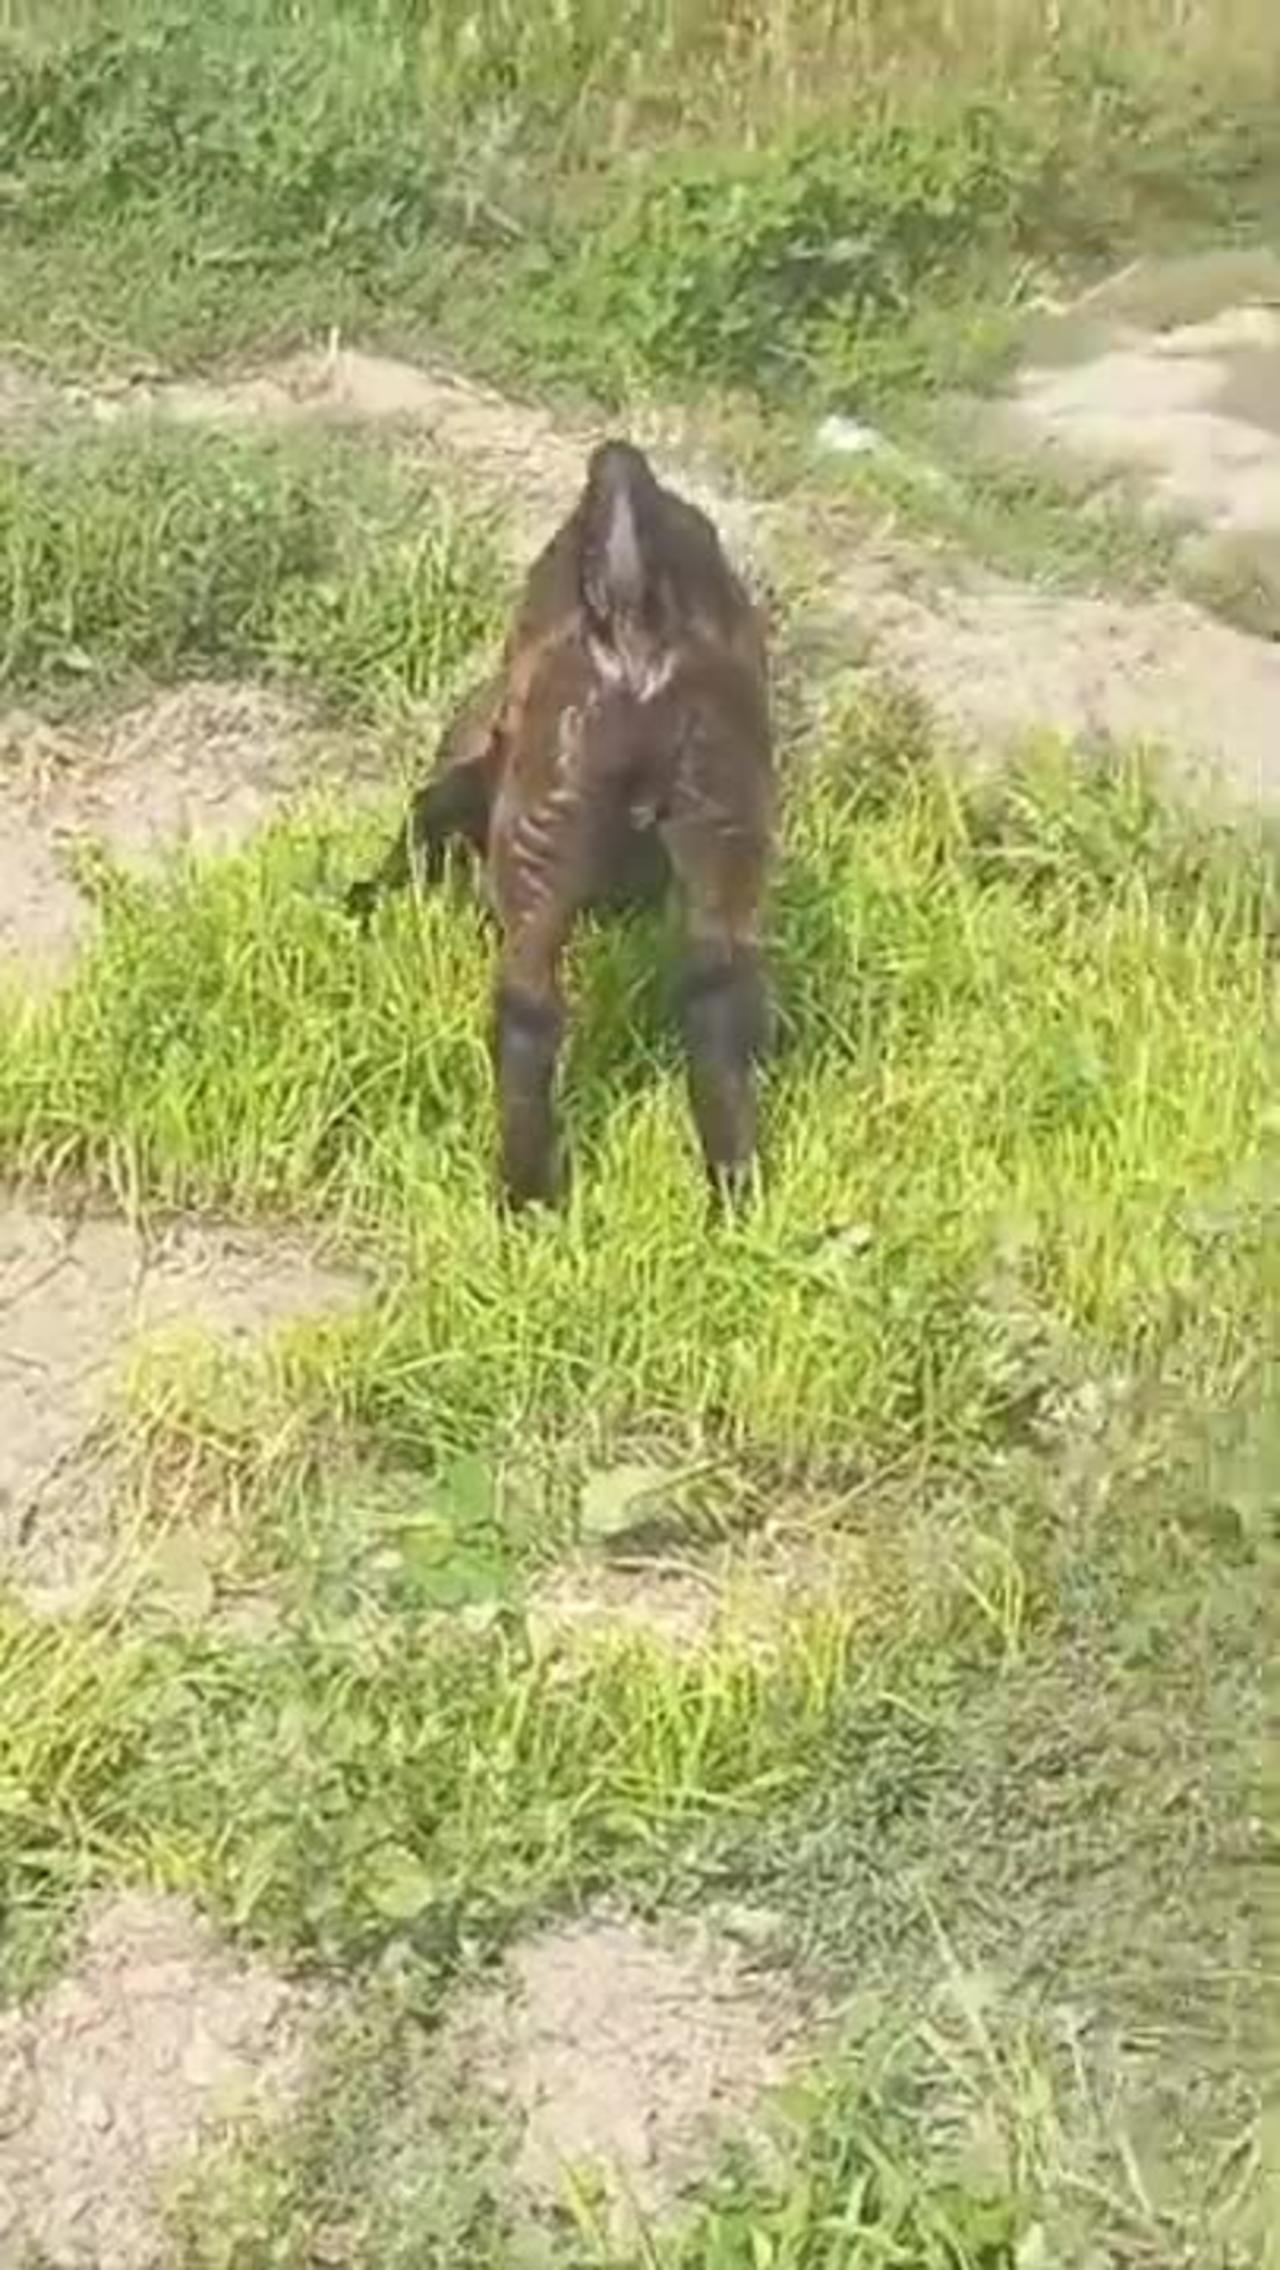 Desi goats Wildlife animals of sindh,Jamil siyal,